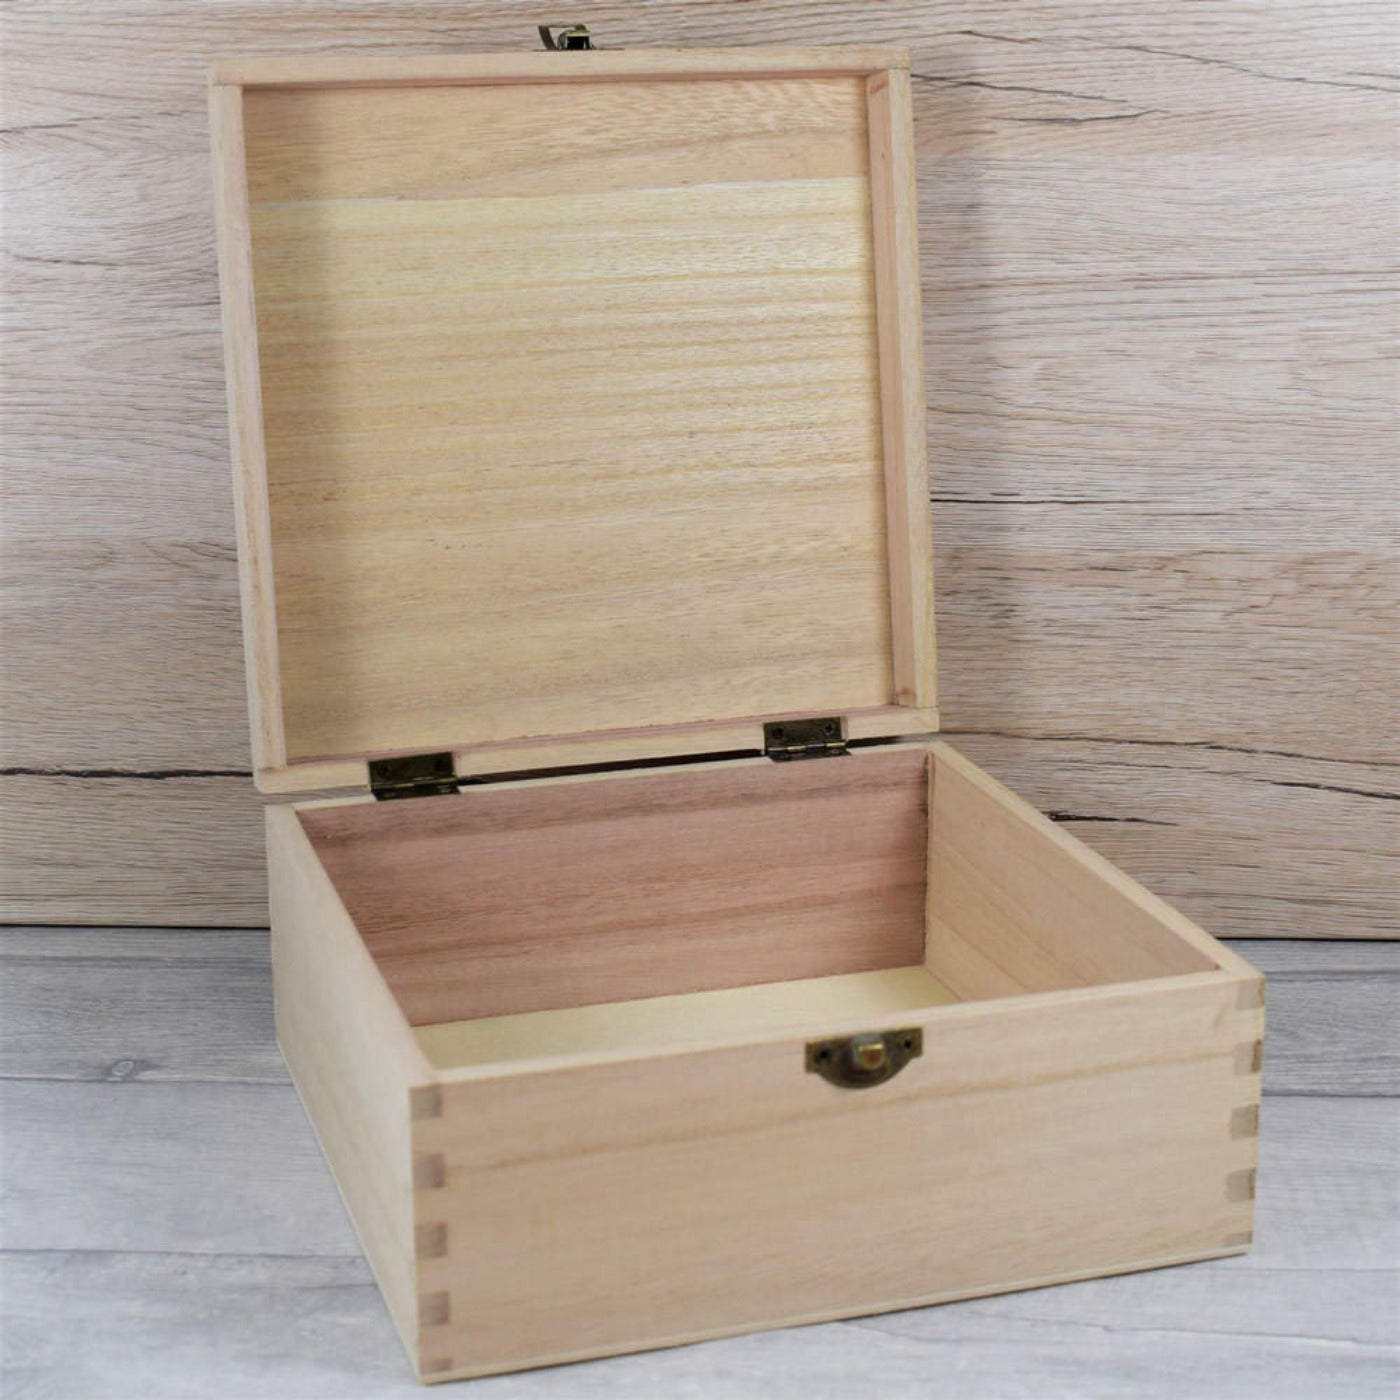 Personalised Wooden Keepsake Box - Initials